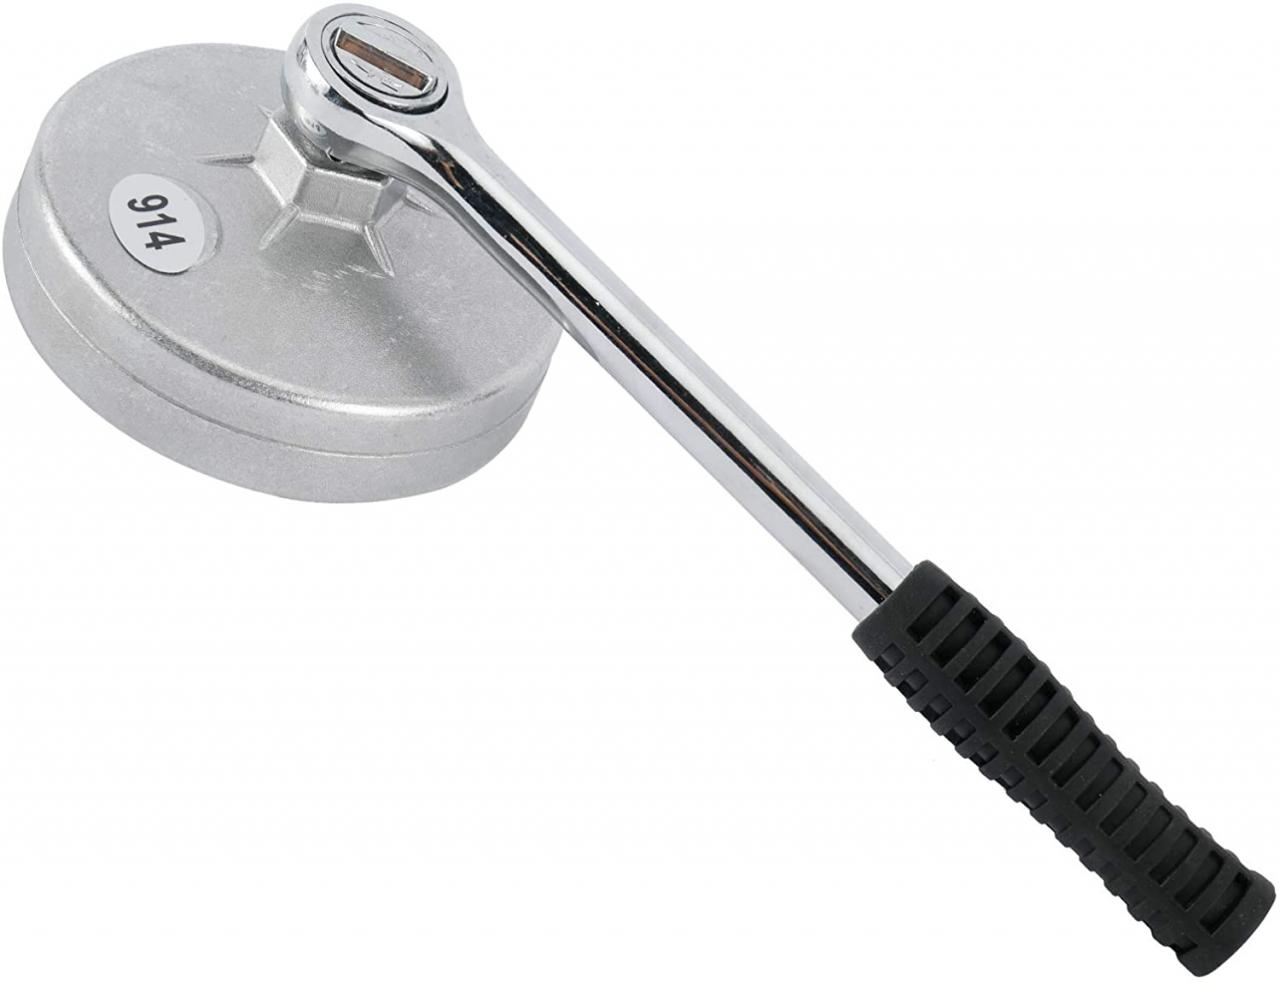 Buy BTSHUB Oil Filter Cap Wrench Metric 23-Piece Socket Set 1/2dr. Tool Kit  65mm-101mm Fit for BMW, VW, Honda, Audi, Ford, Toyota, Nissan etc Online in  Vietnam. B08GG42RCN